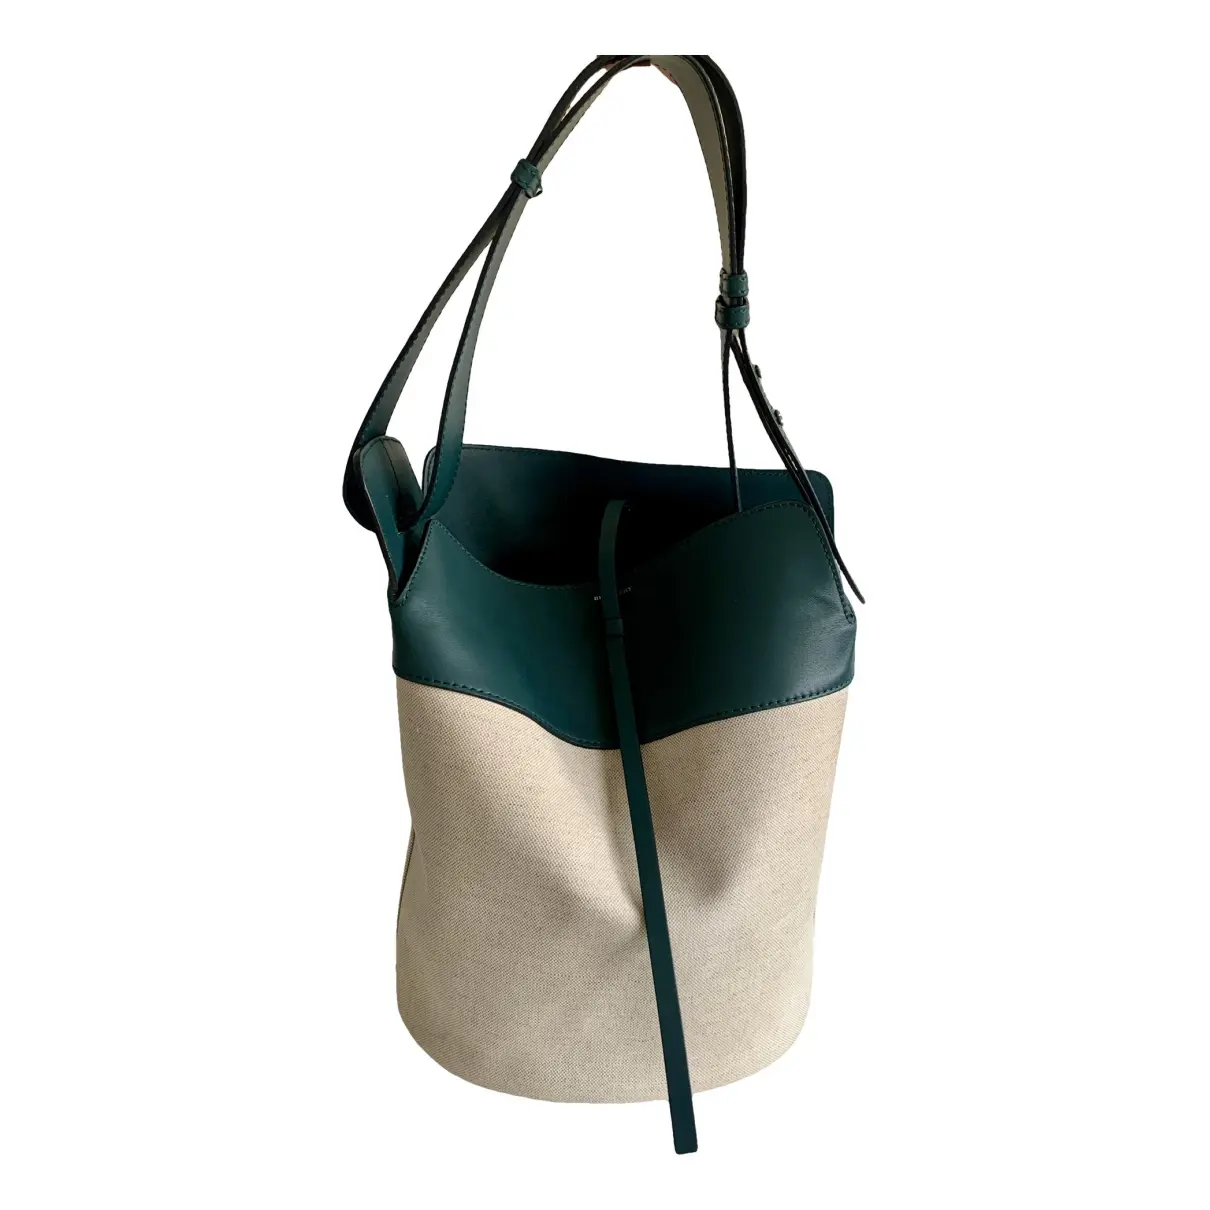 The Bucket leather handbag